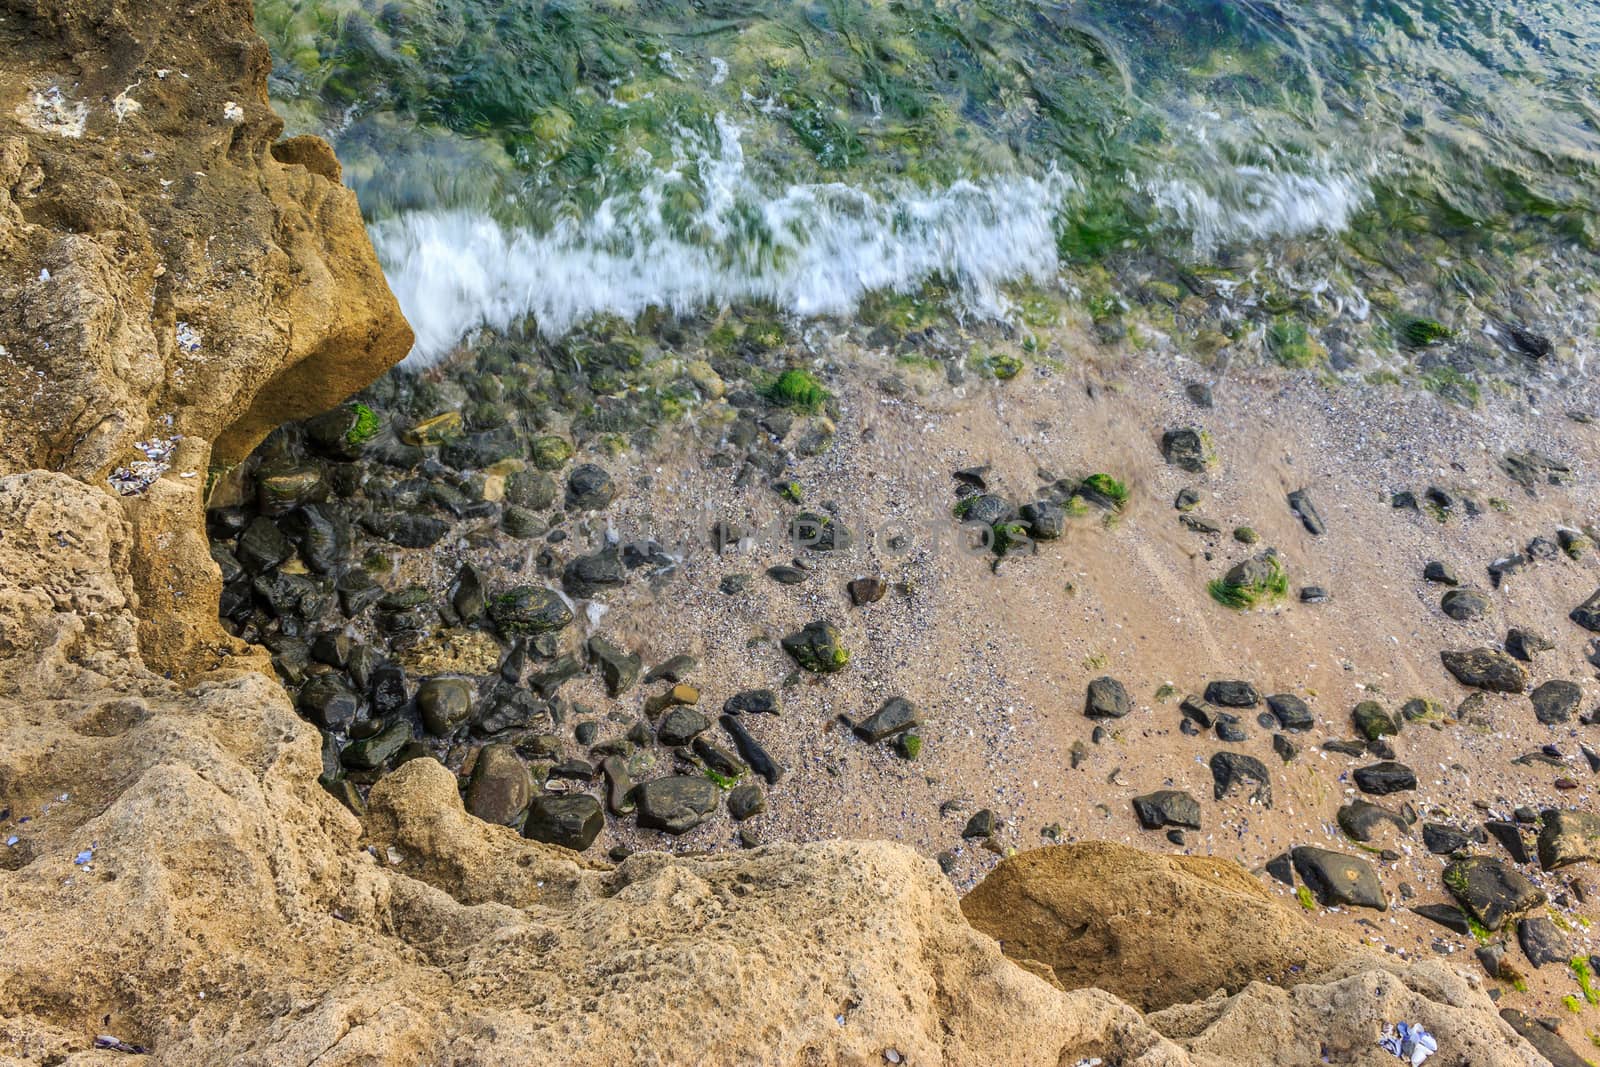 wave rolls onto the rocks on the sandy sea coast